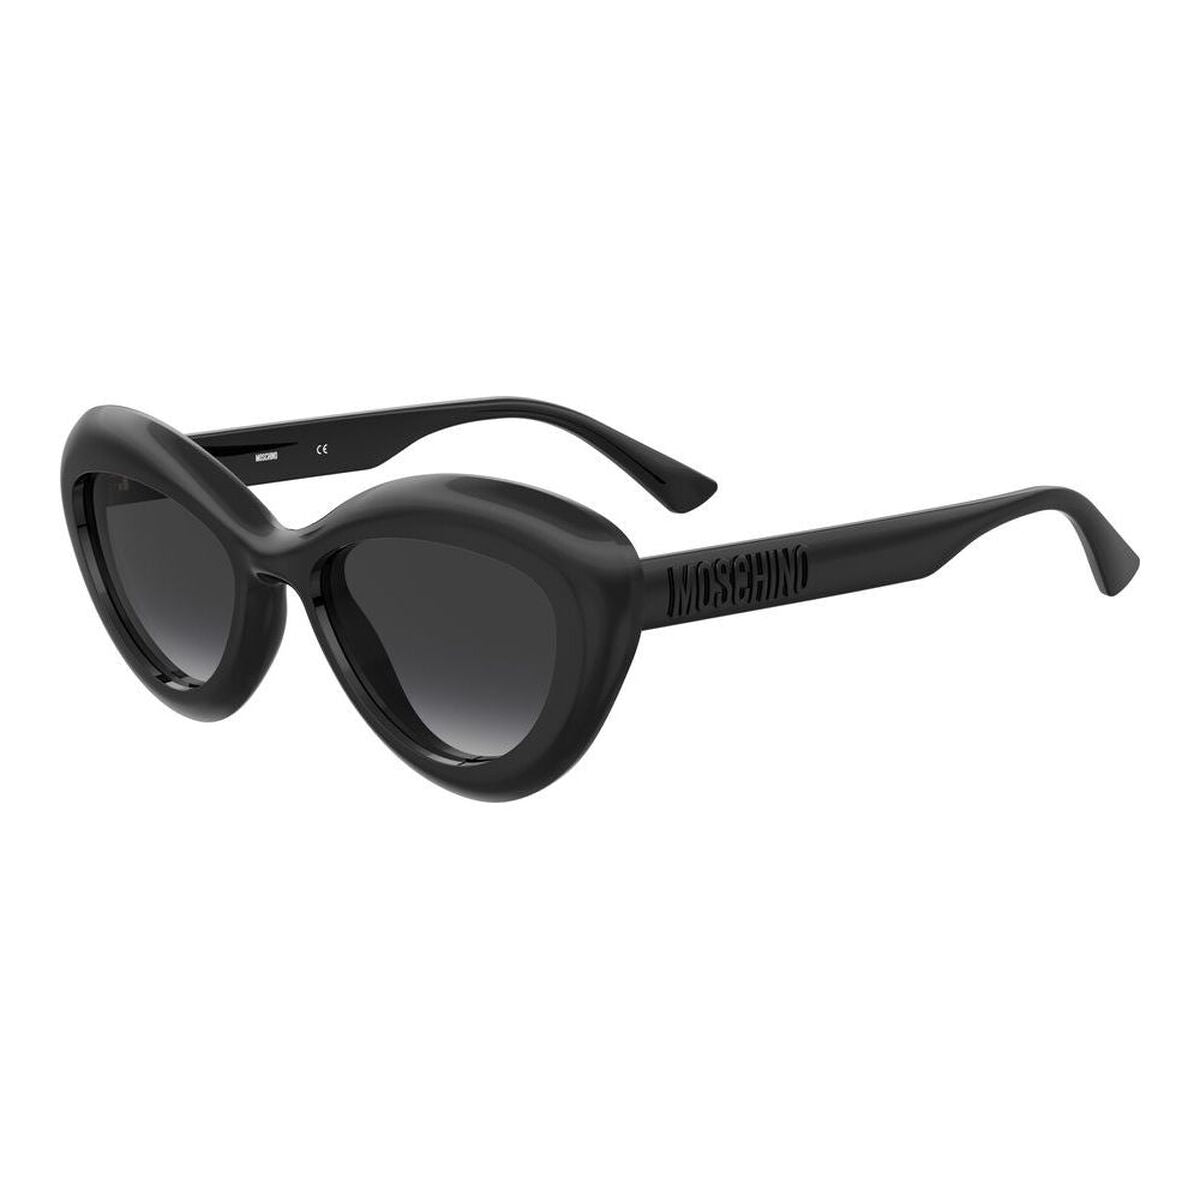 Kaufe Damensonnenbrille Moschino MOS163_S bei AWK Flagship um € 208.00